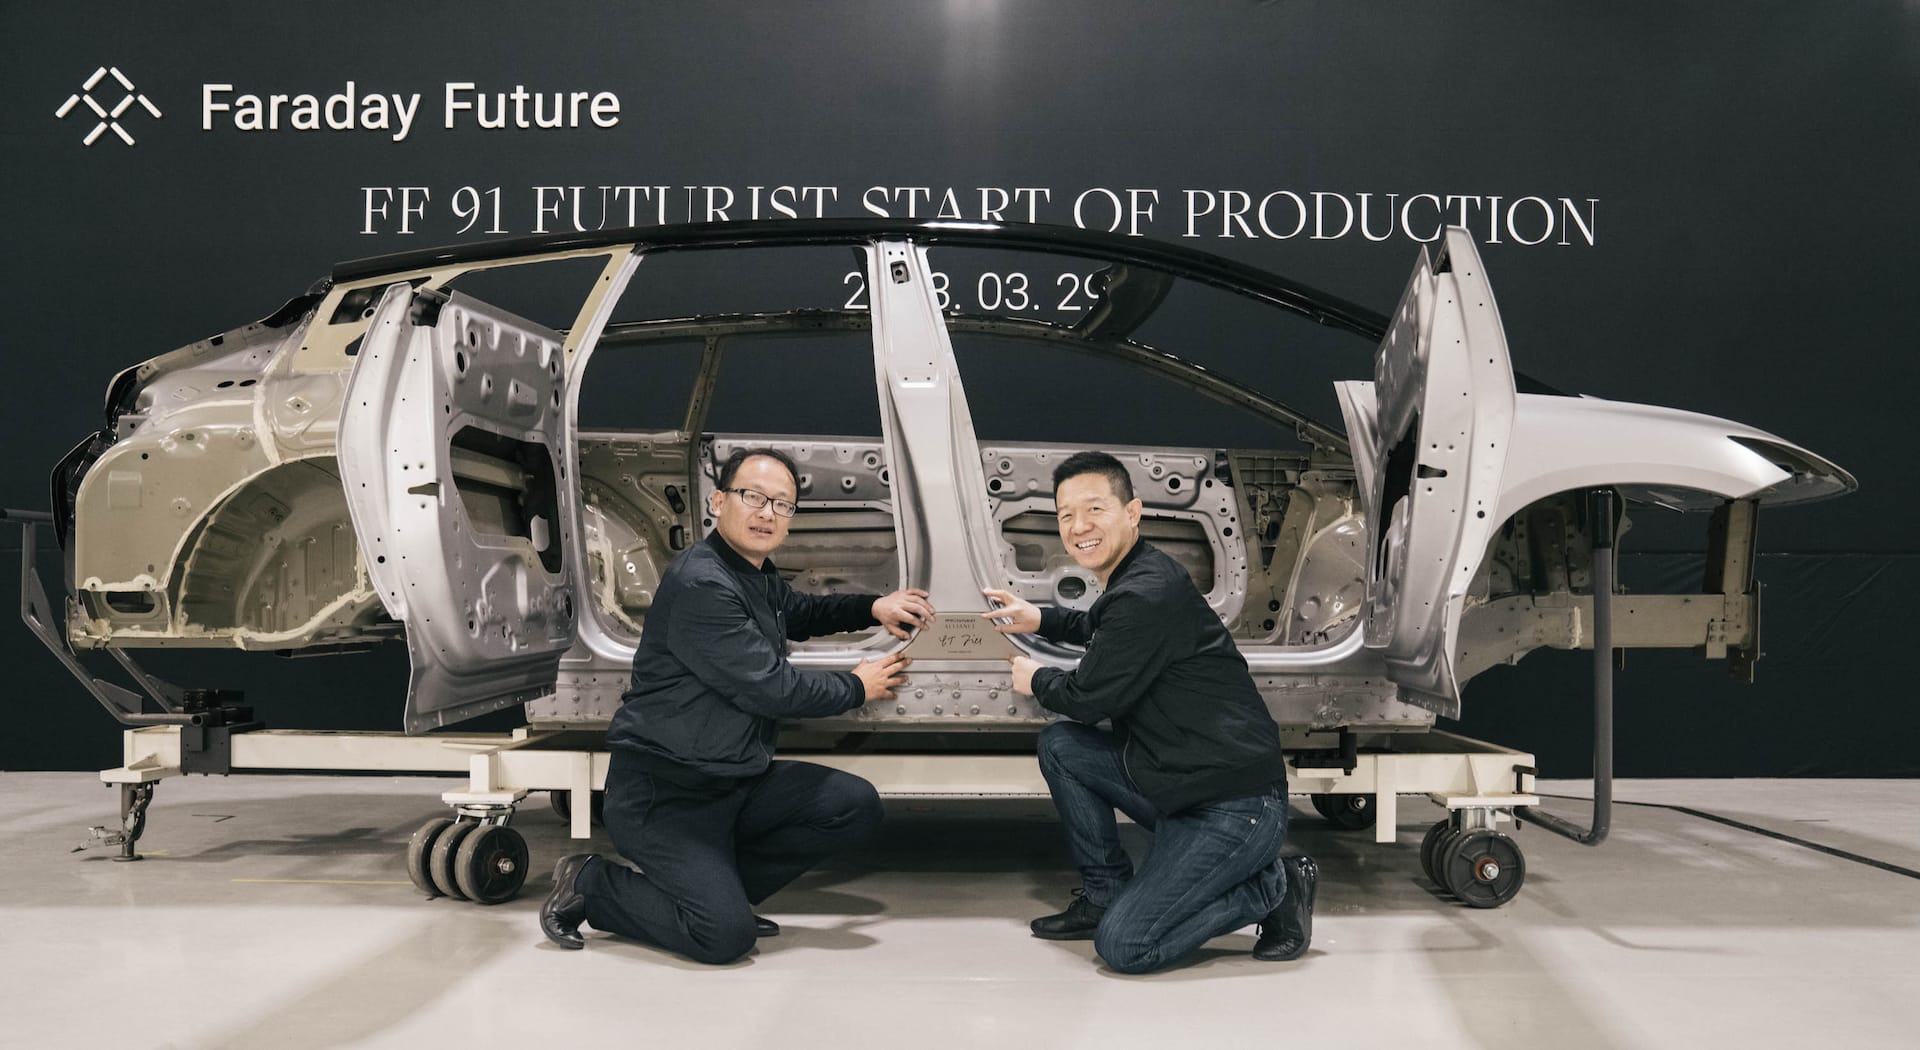 Faraday Future begins production of its flagship FF 91 Futurist model